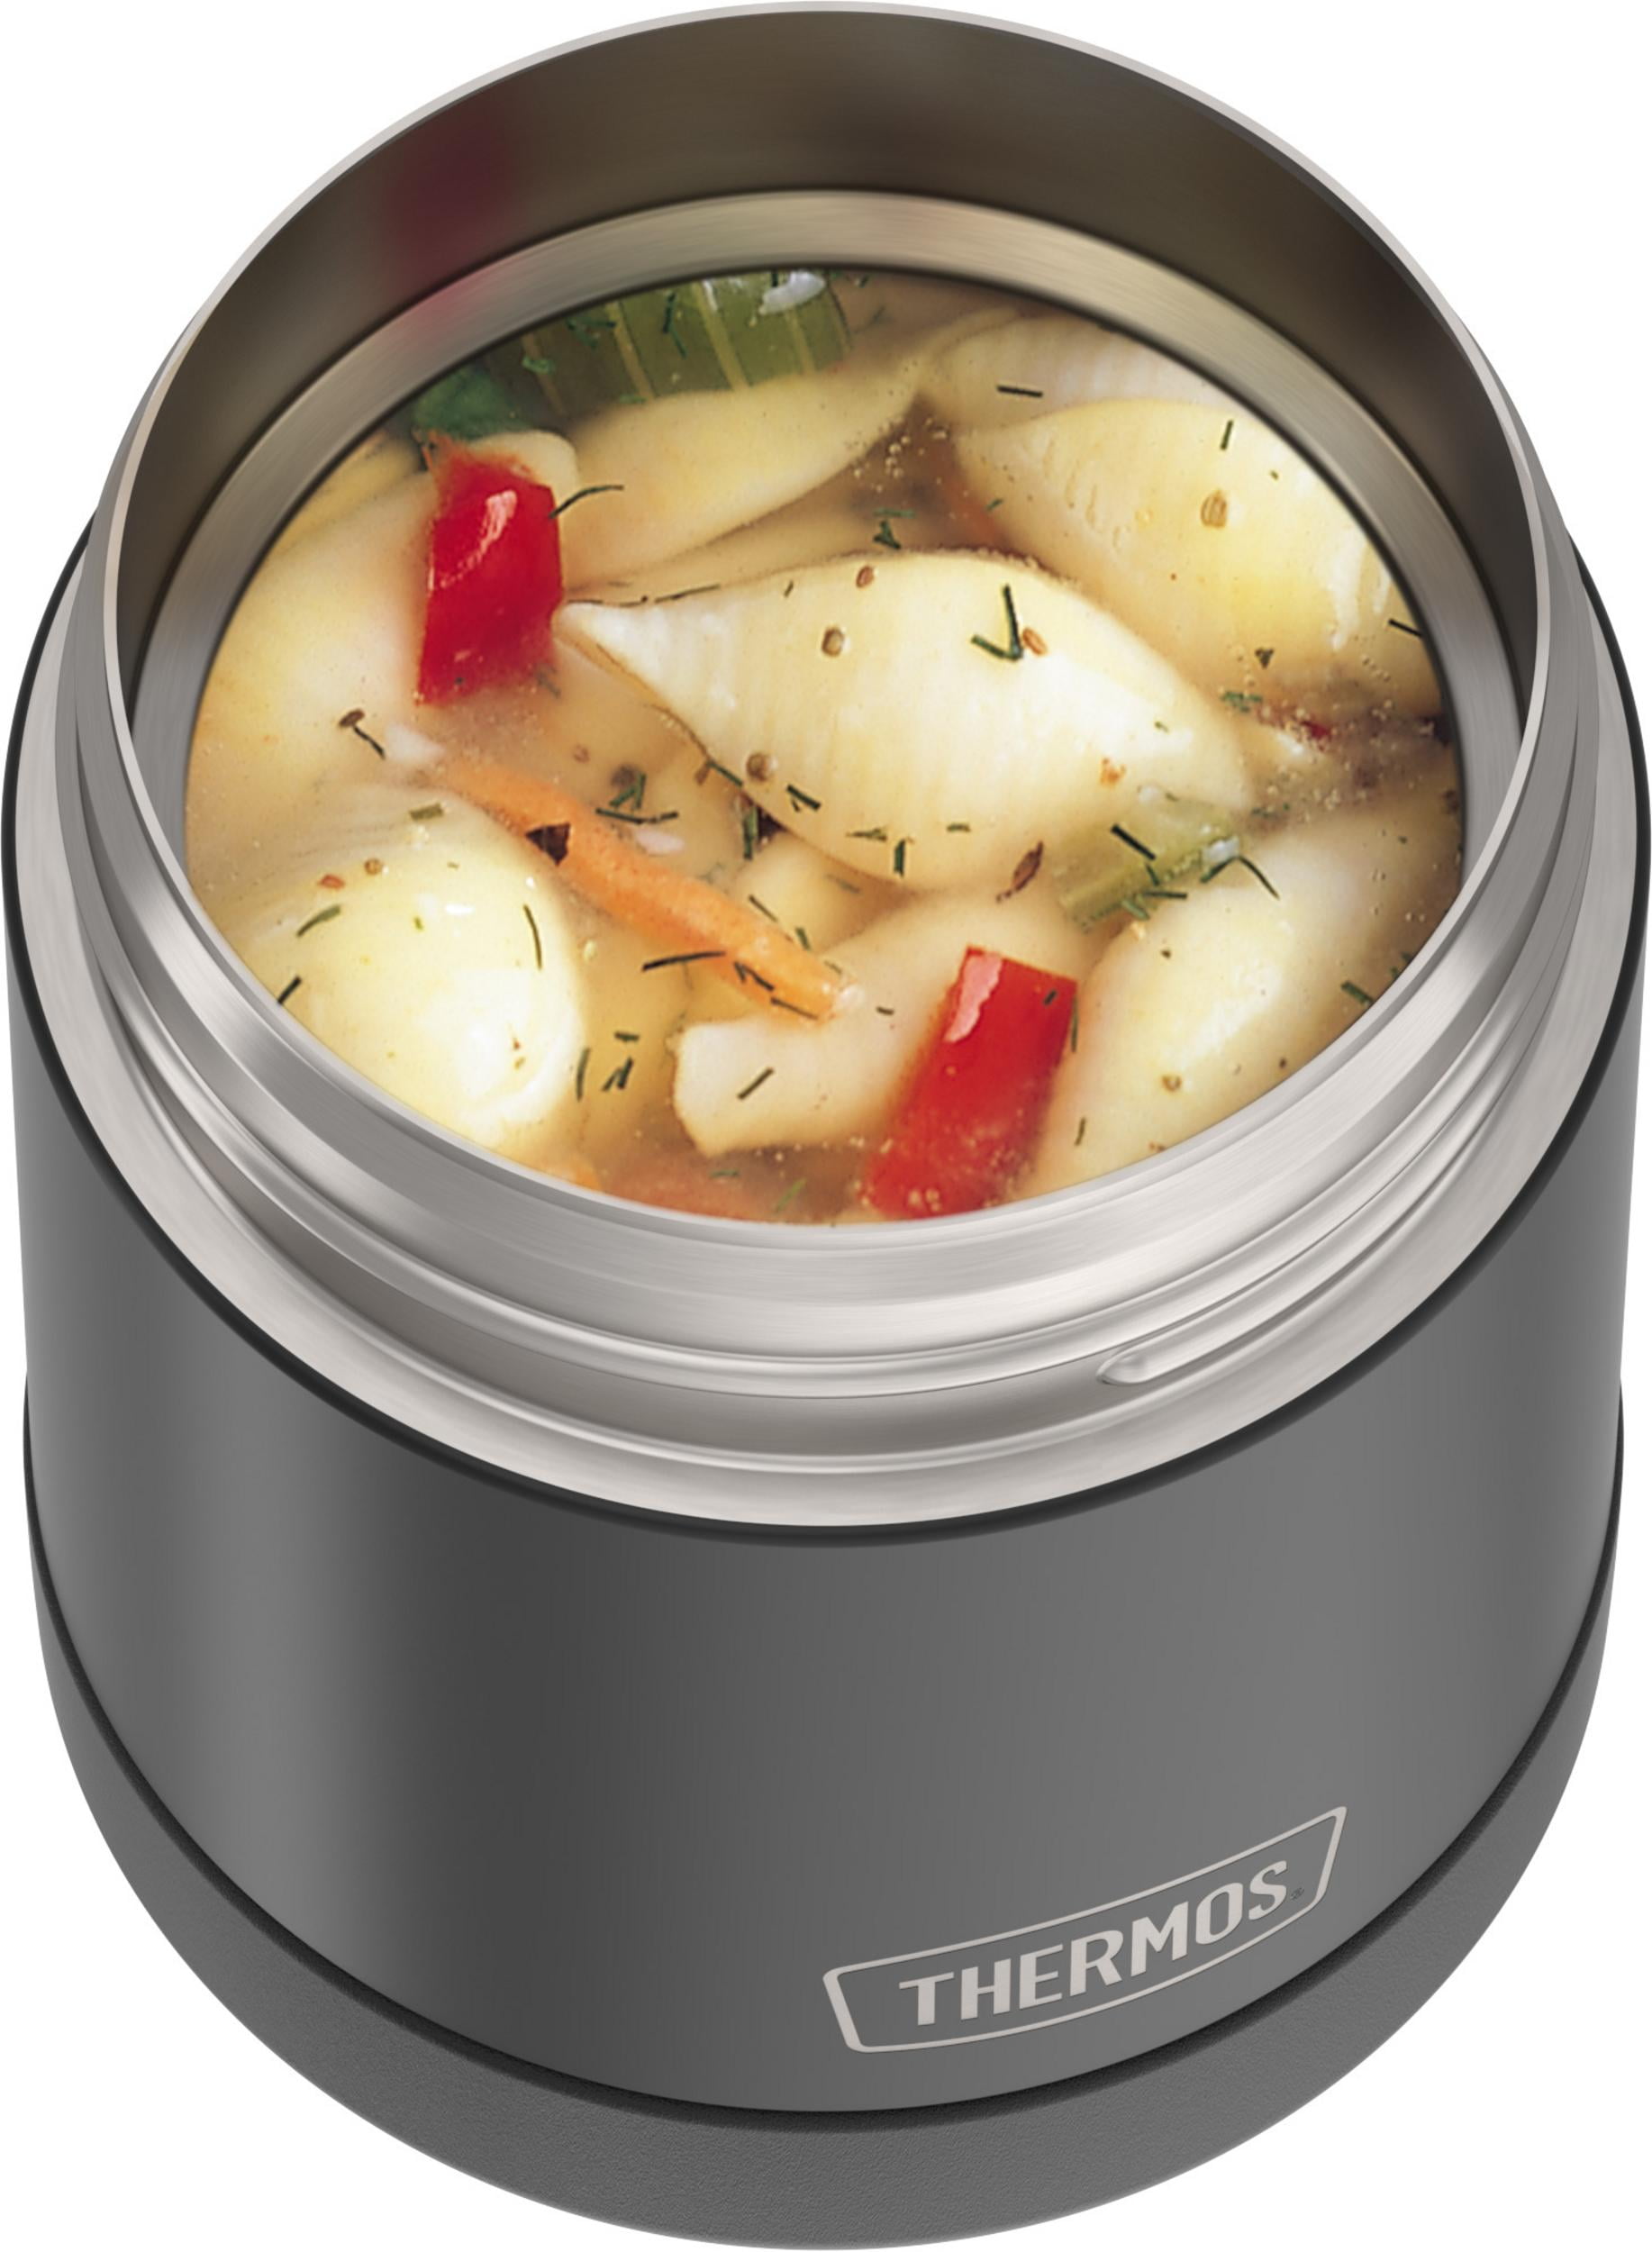 Stanley 10oz./0.3 Liter Insulated Travel Food Jar Black Thermos 